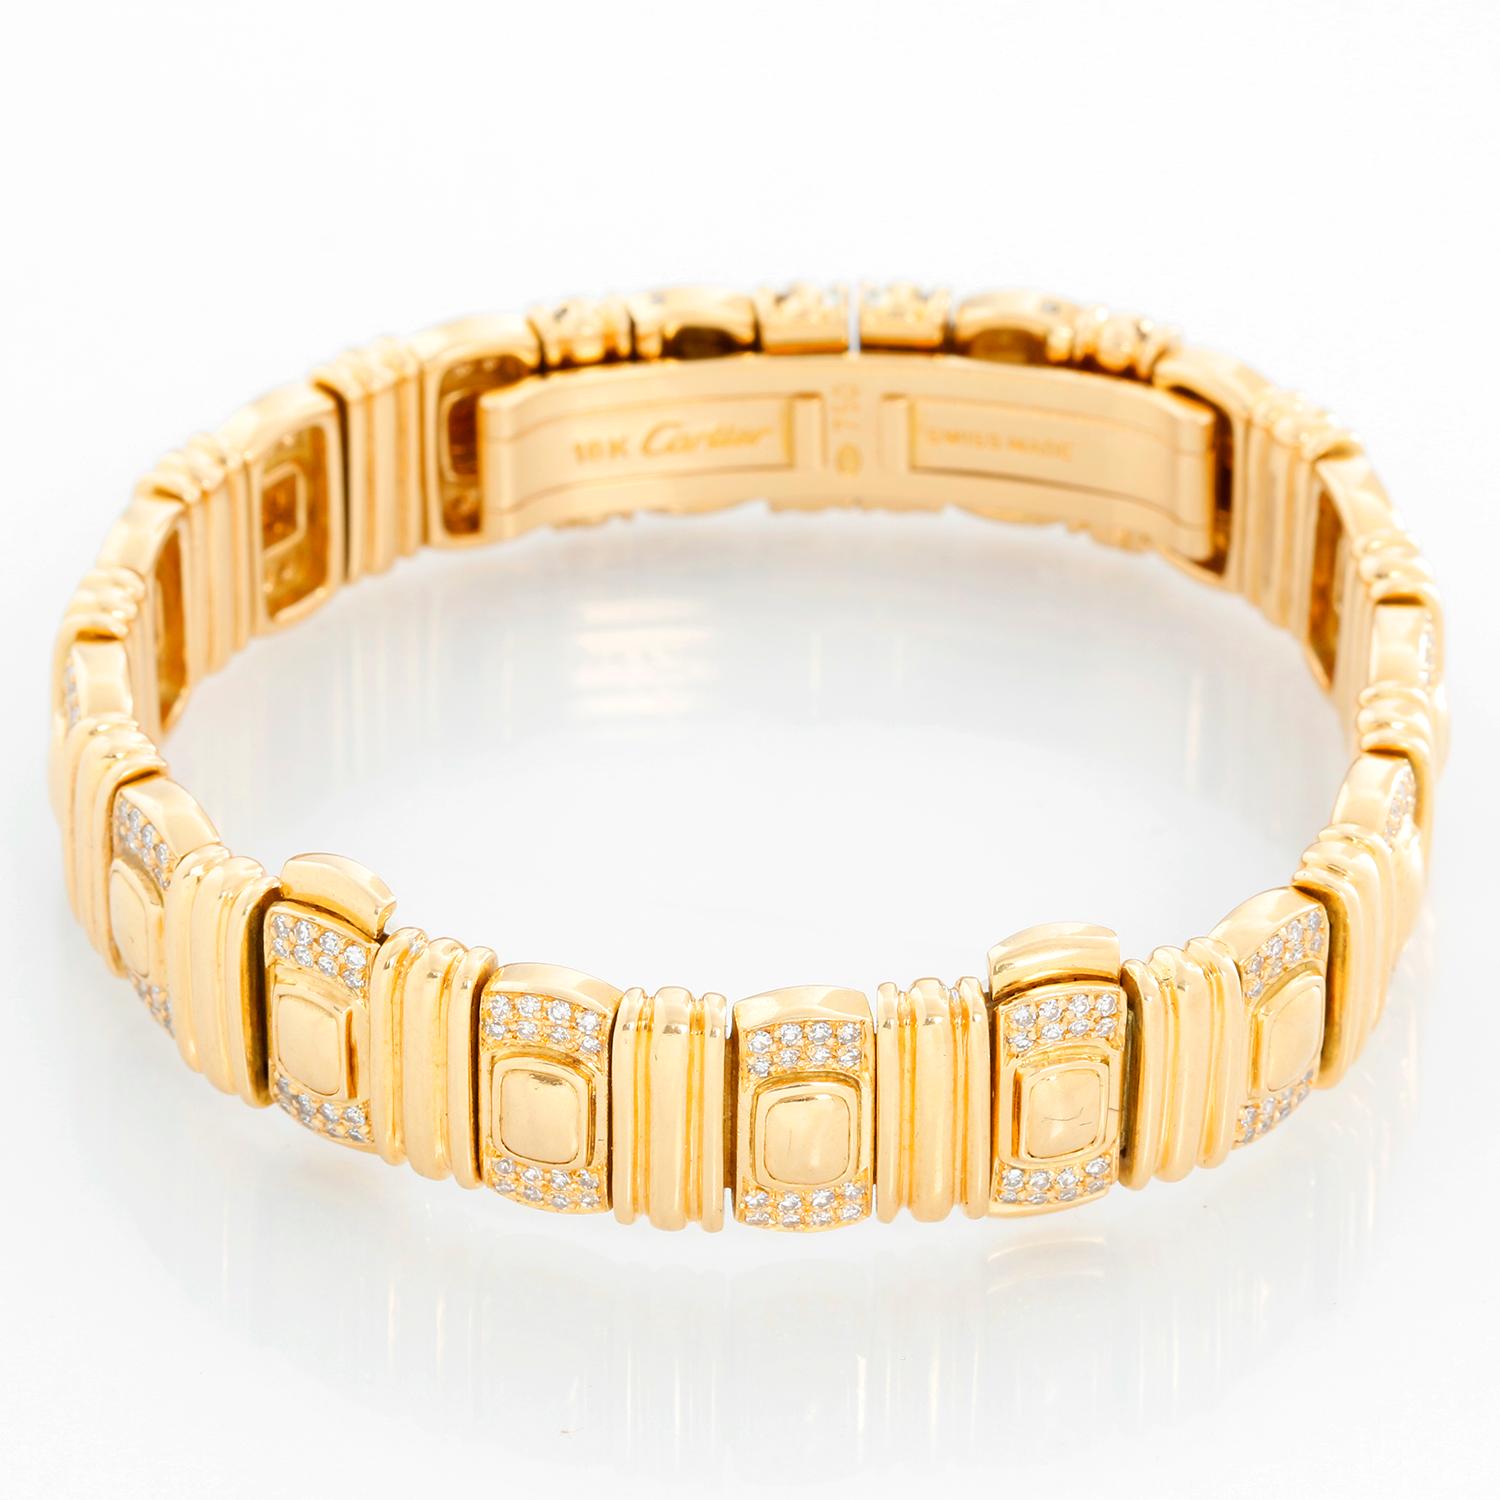 Cartier 18K Yellow gold Quartz Ellipse Ladies Watch / Bracelet  - Quartz. 18K Yellow gold with 3 row of diamonds ( 22 x 26 mm). Ivory dial with Roman numerals. 18K Yellow gold bracelet with diamonds; will fit a 6 3/4 inch wrist. Pre-owed with